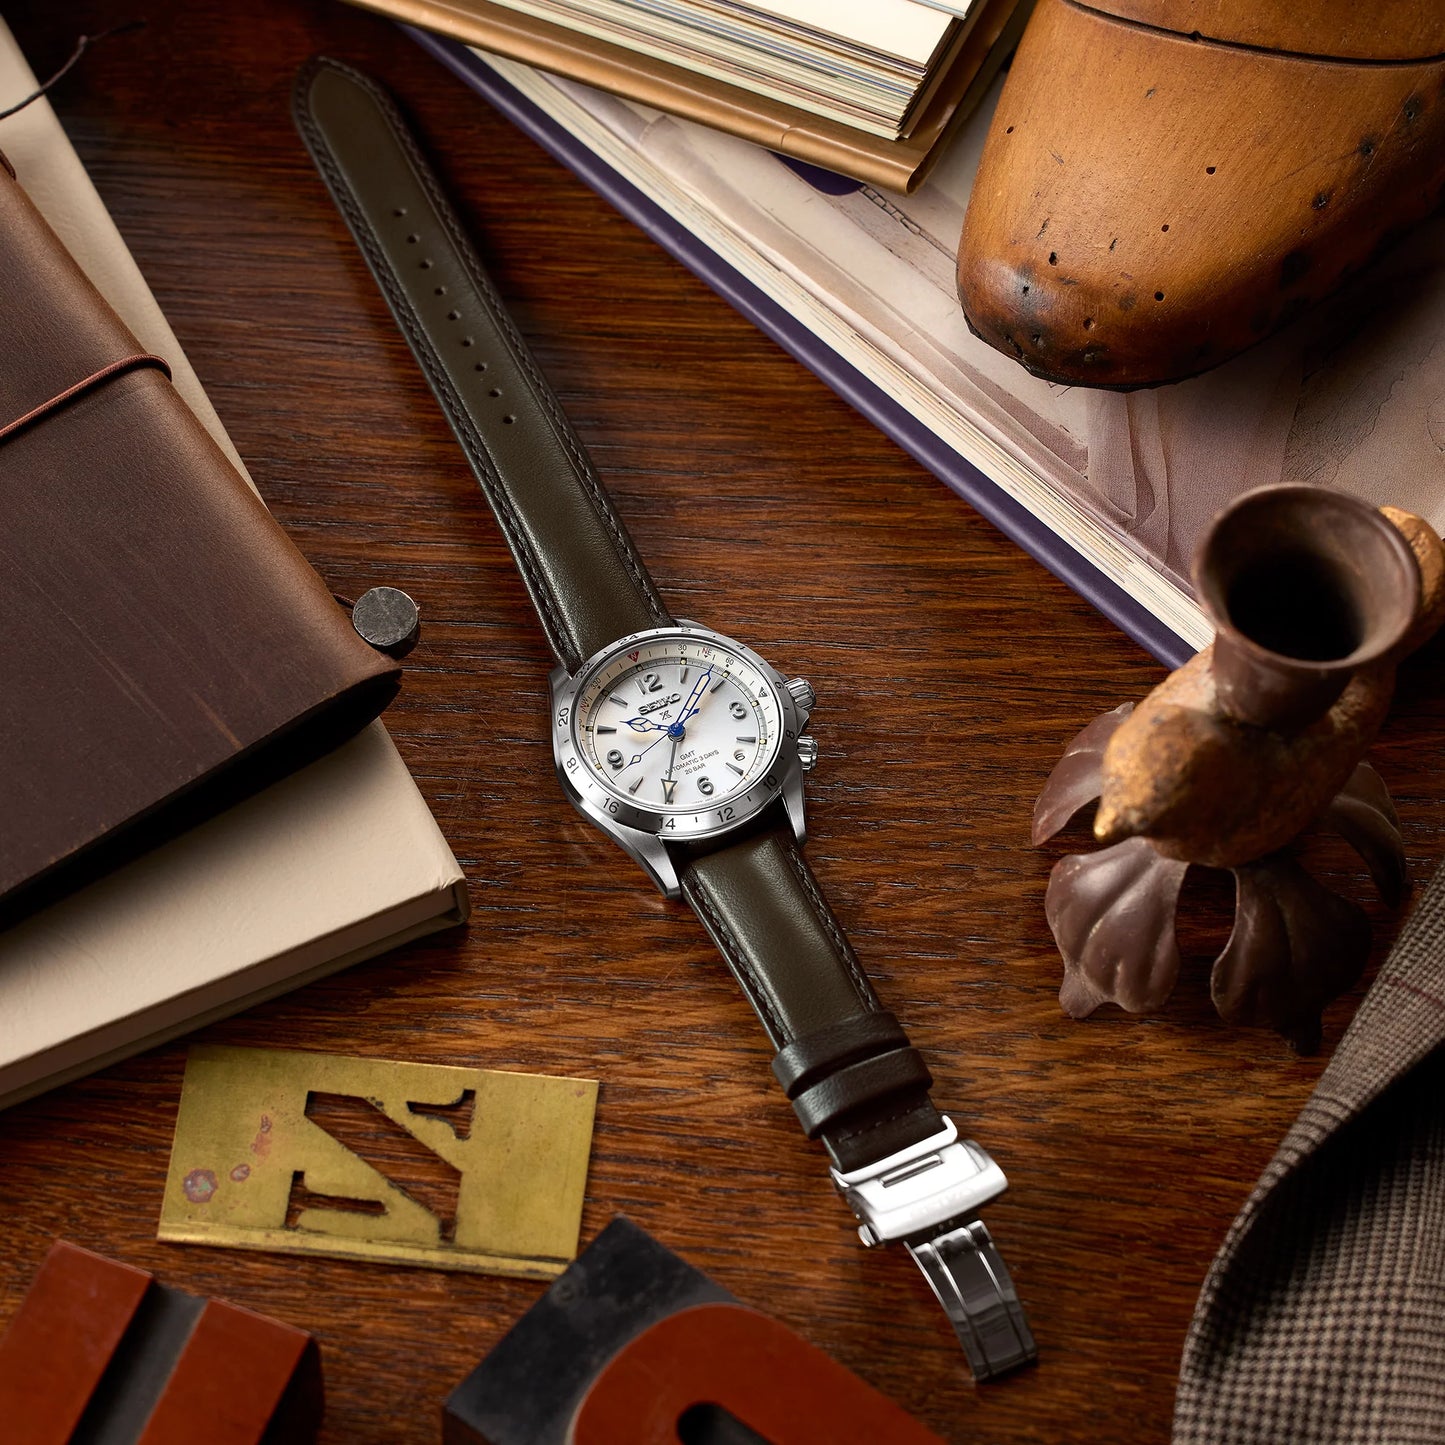 SPB409J1 | SEIKO Prospex Alpinist Mechanical GMT Limited Edition 110th Seiko Wristwatchmaking Anniversary